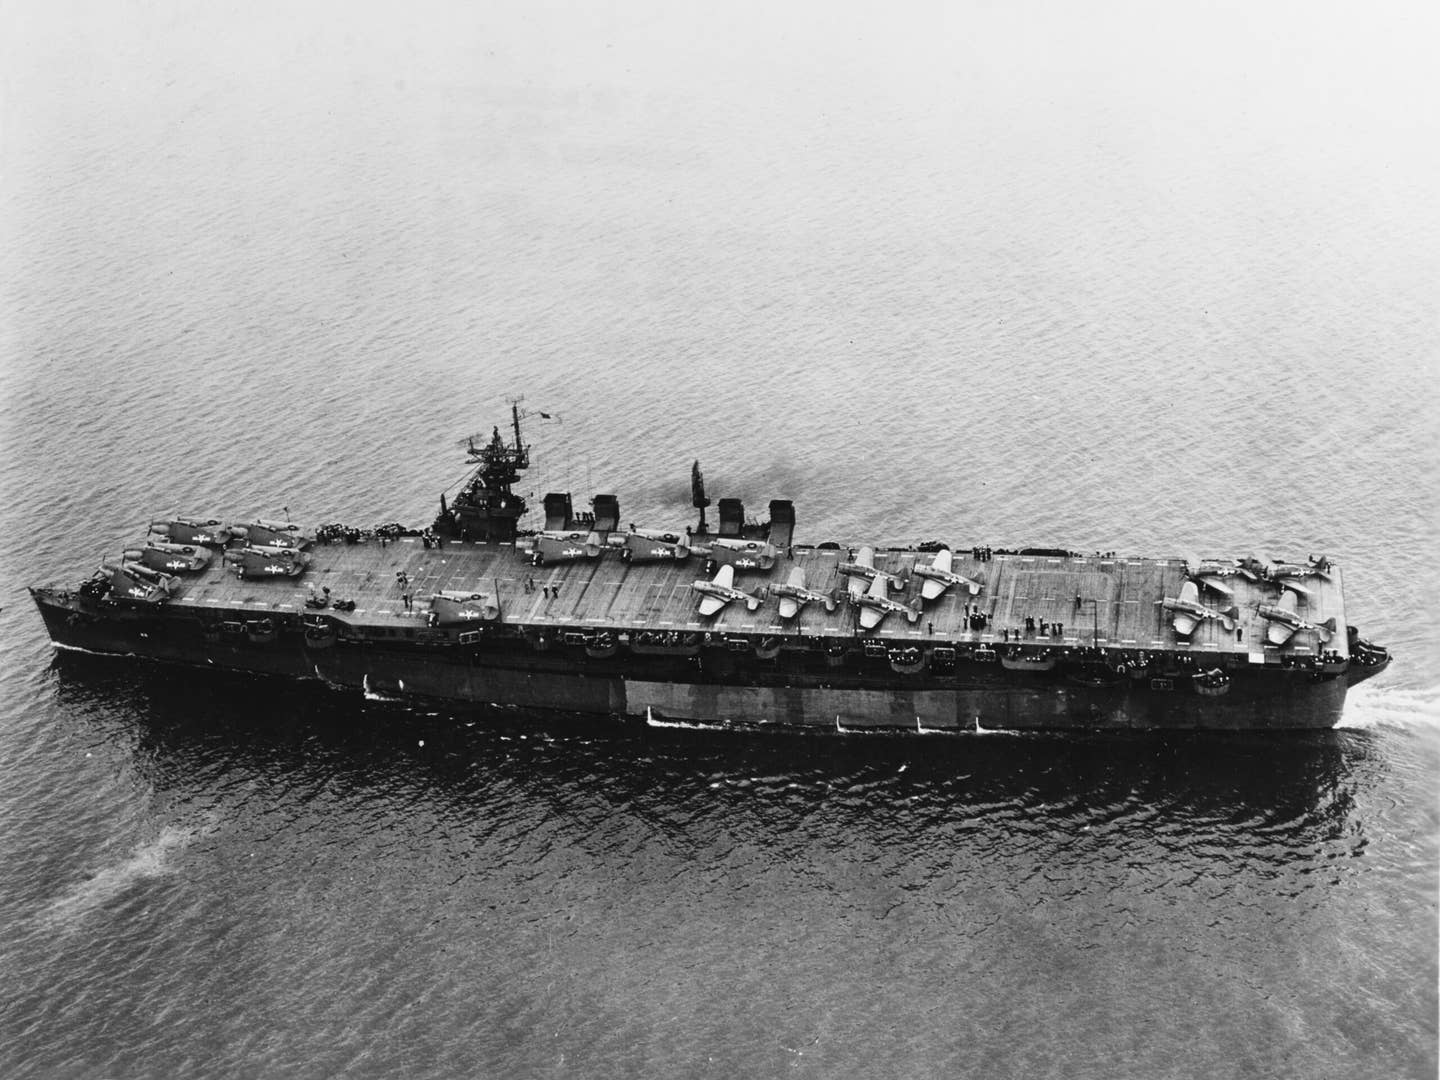 SBD Dauntless dive-bombers arranged on the deck of the new light aircraft carrier USS&nbsp;<em>Independence</em>&nbsp;(CVL-22) in San Francisco Bay, July 1943. <em>U.S. Navy&nbsp;</em>